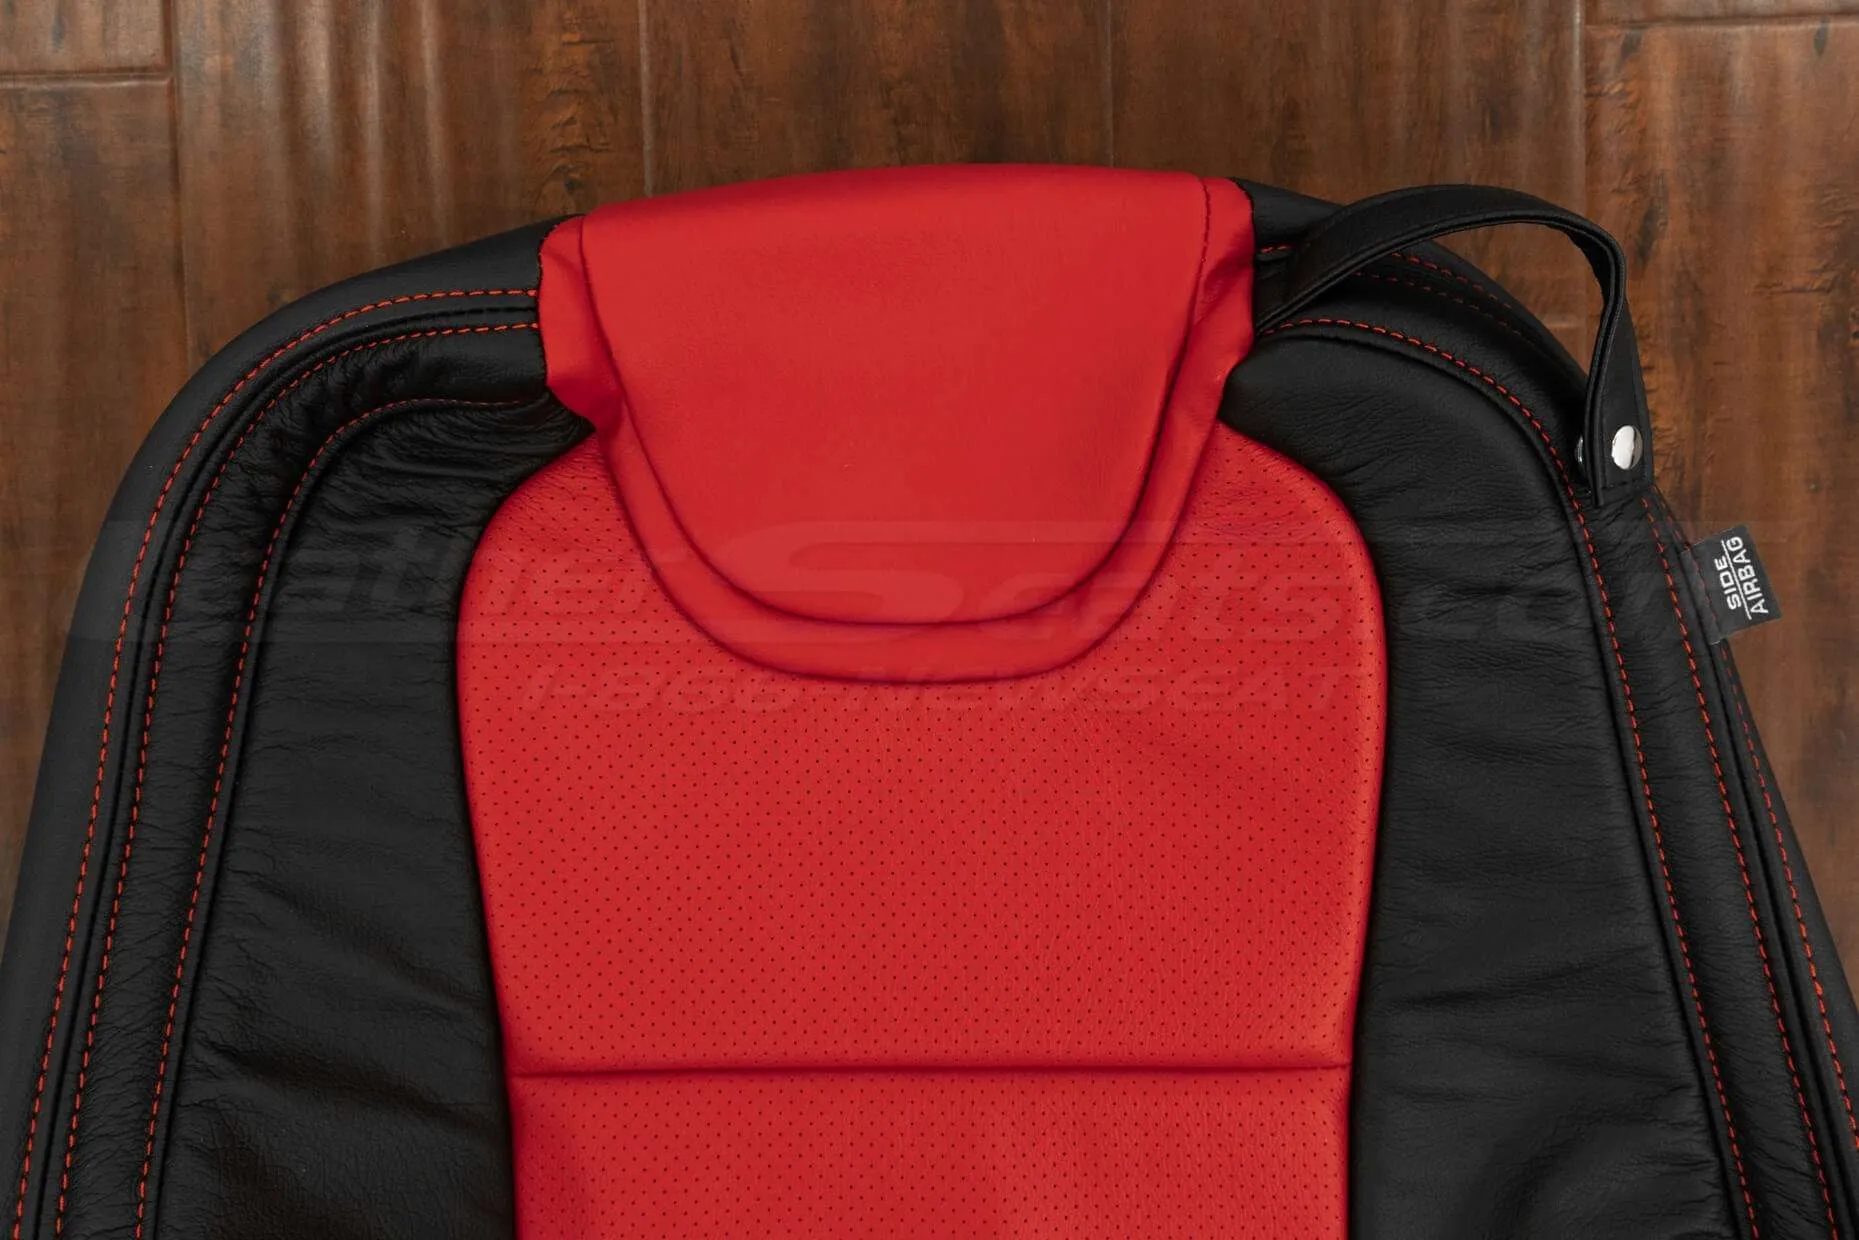 Chevrolet Camaro Leather Kit - Black & Bright Red - Upper section of front backrest